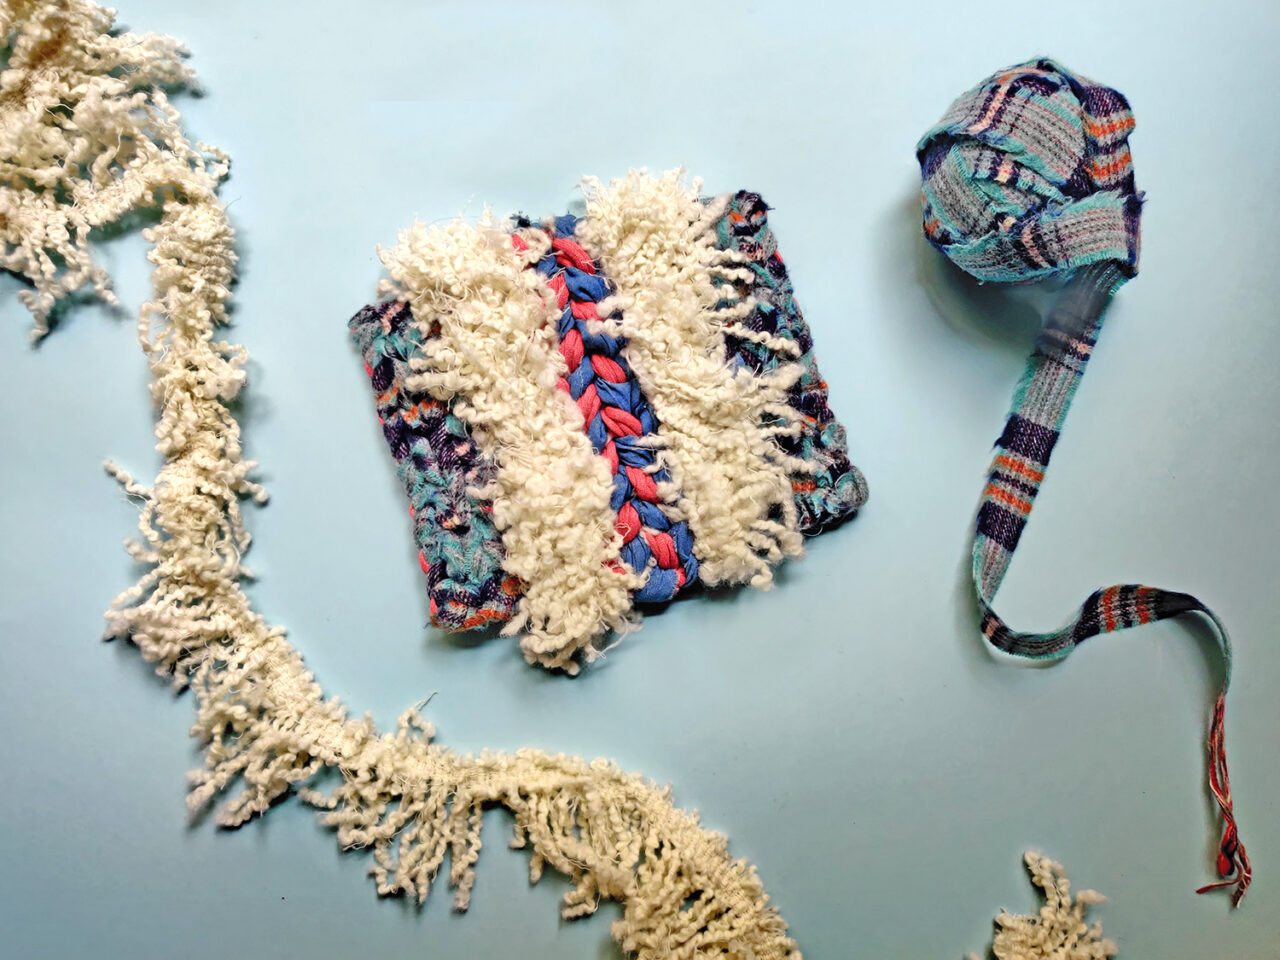 Handmade woollen twined rug made using selvedges